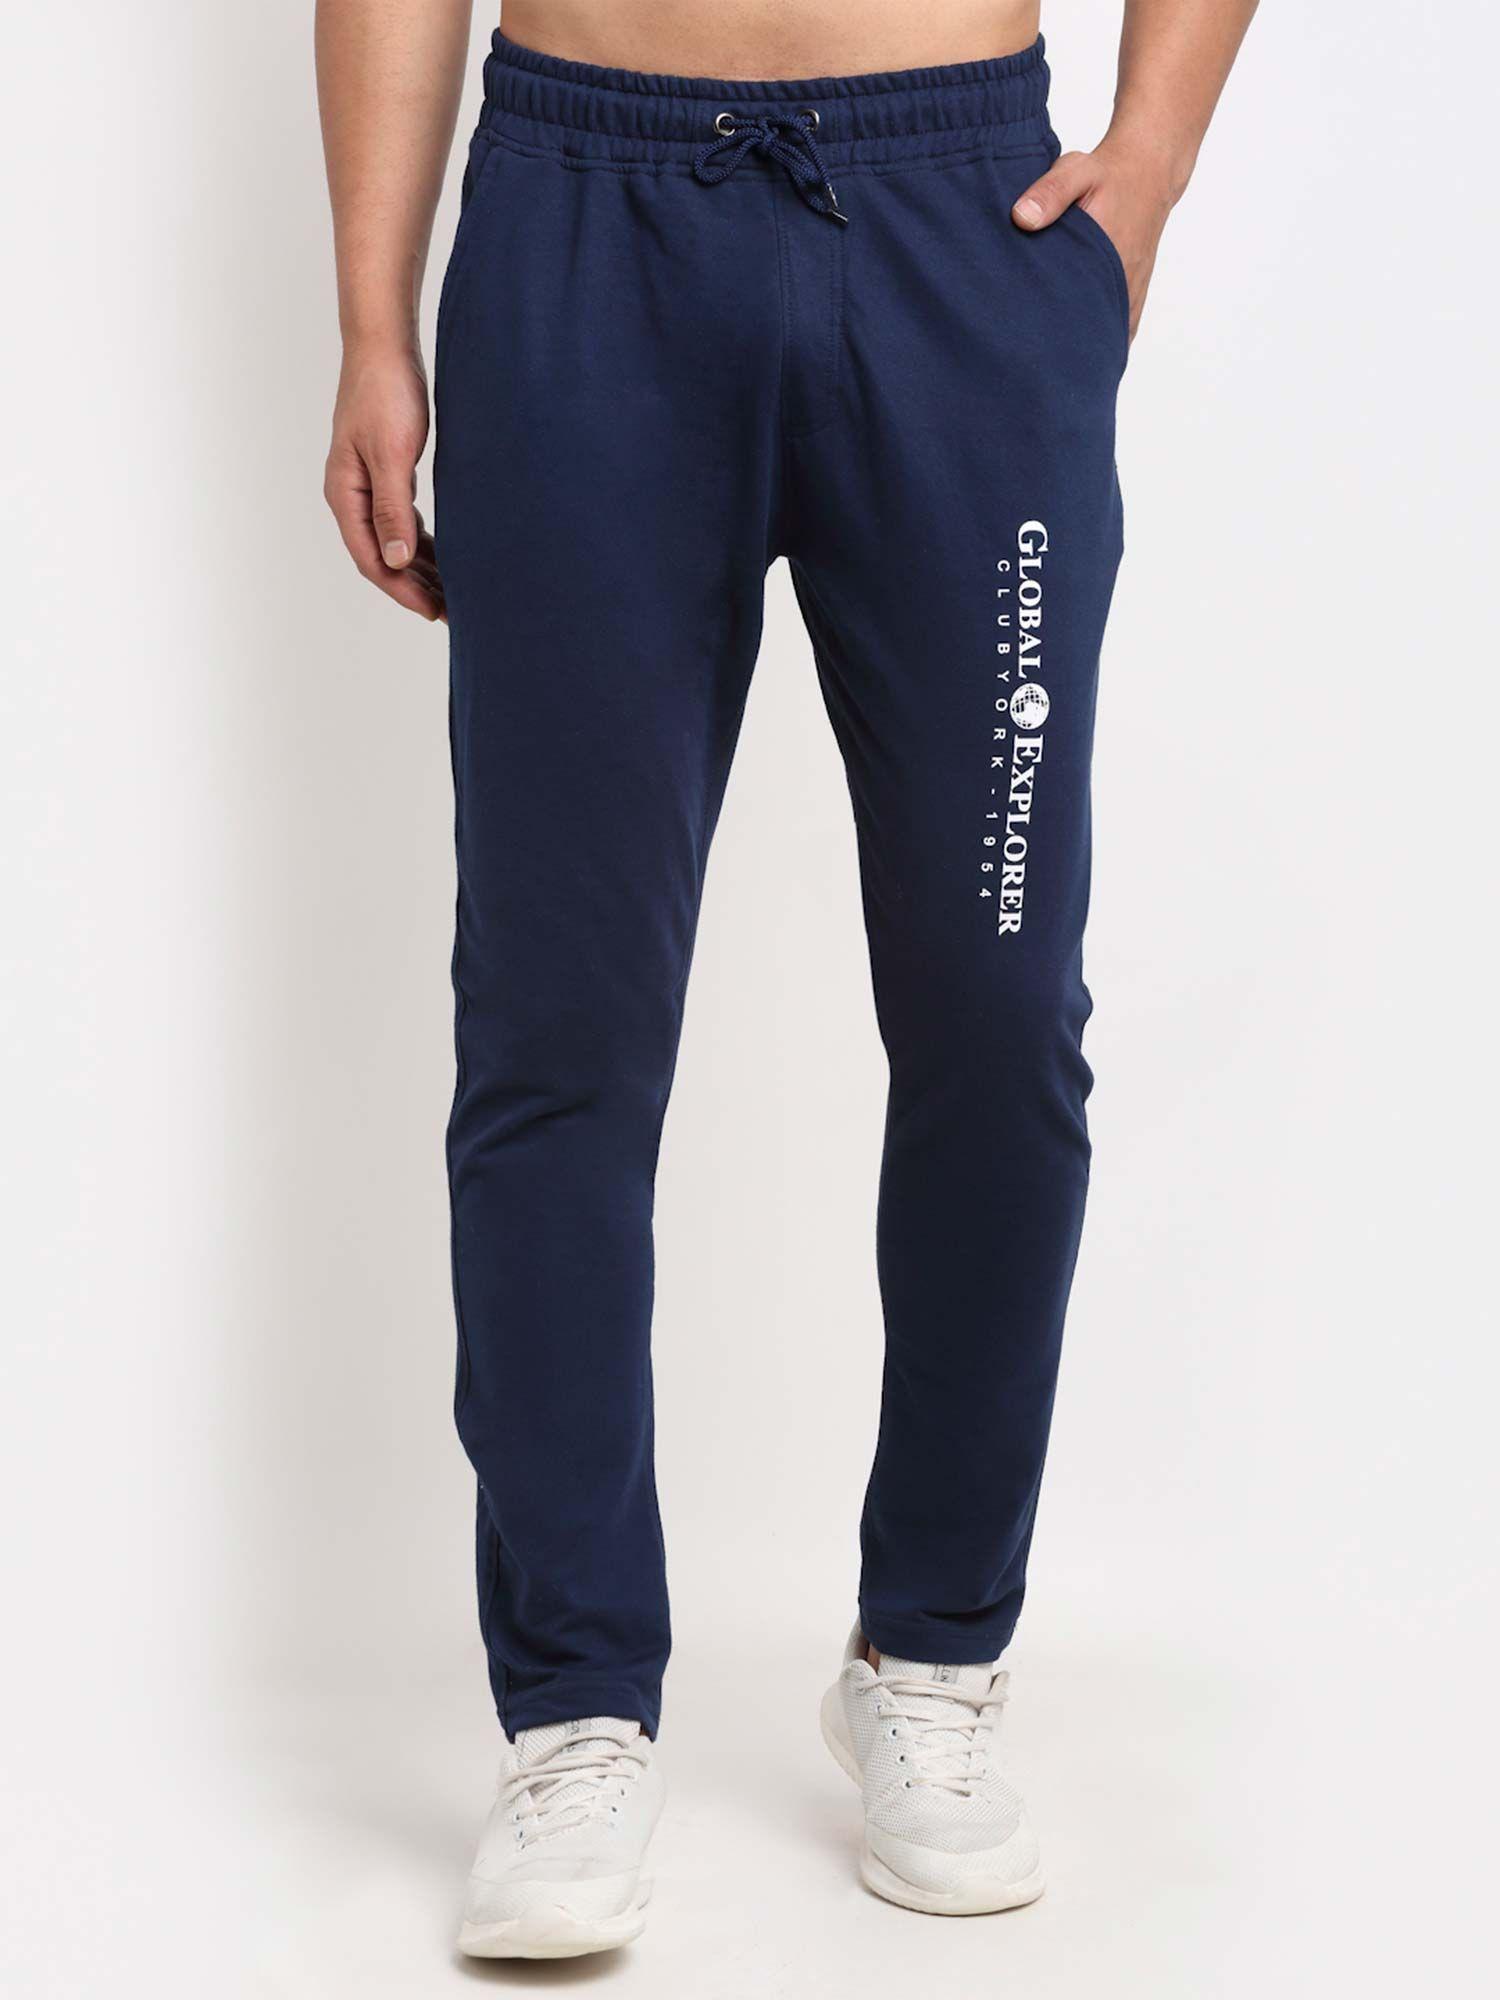 men navy blue printed track pants